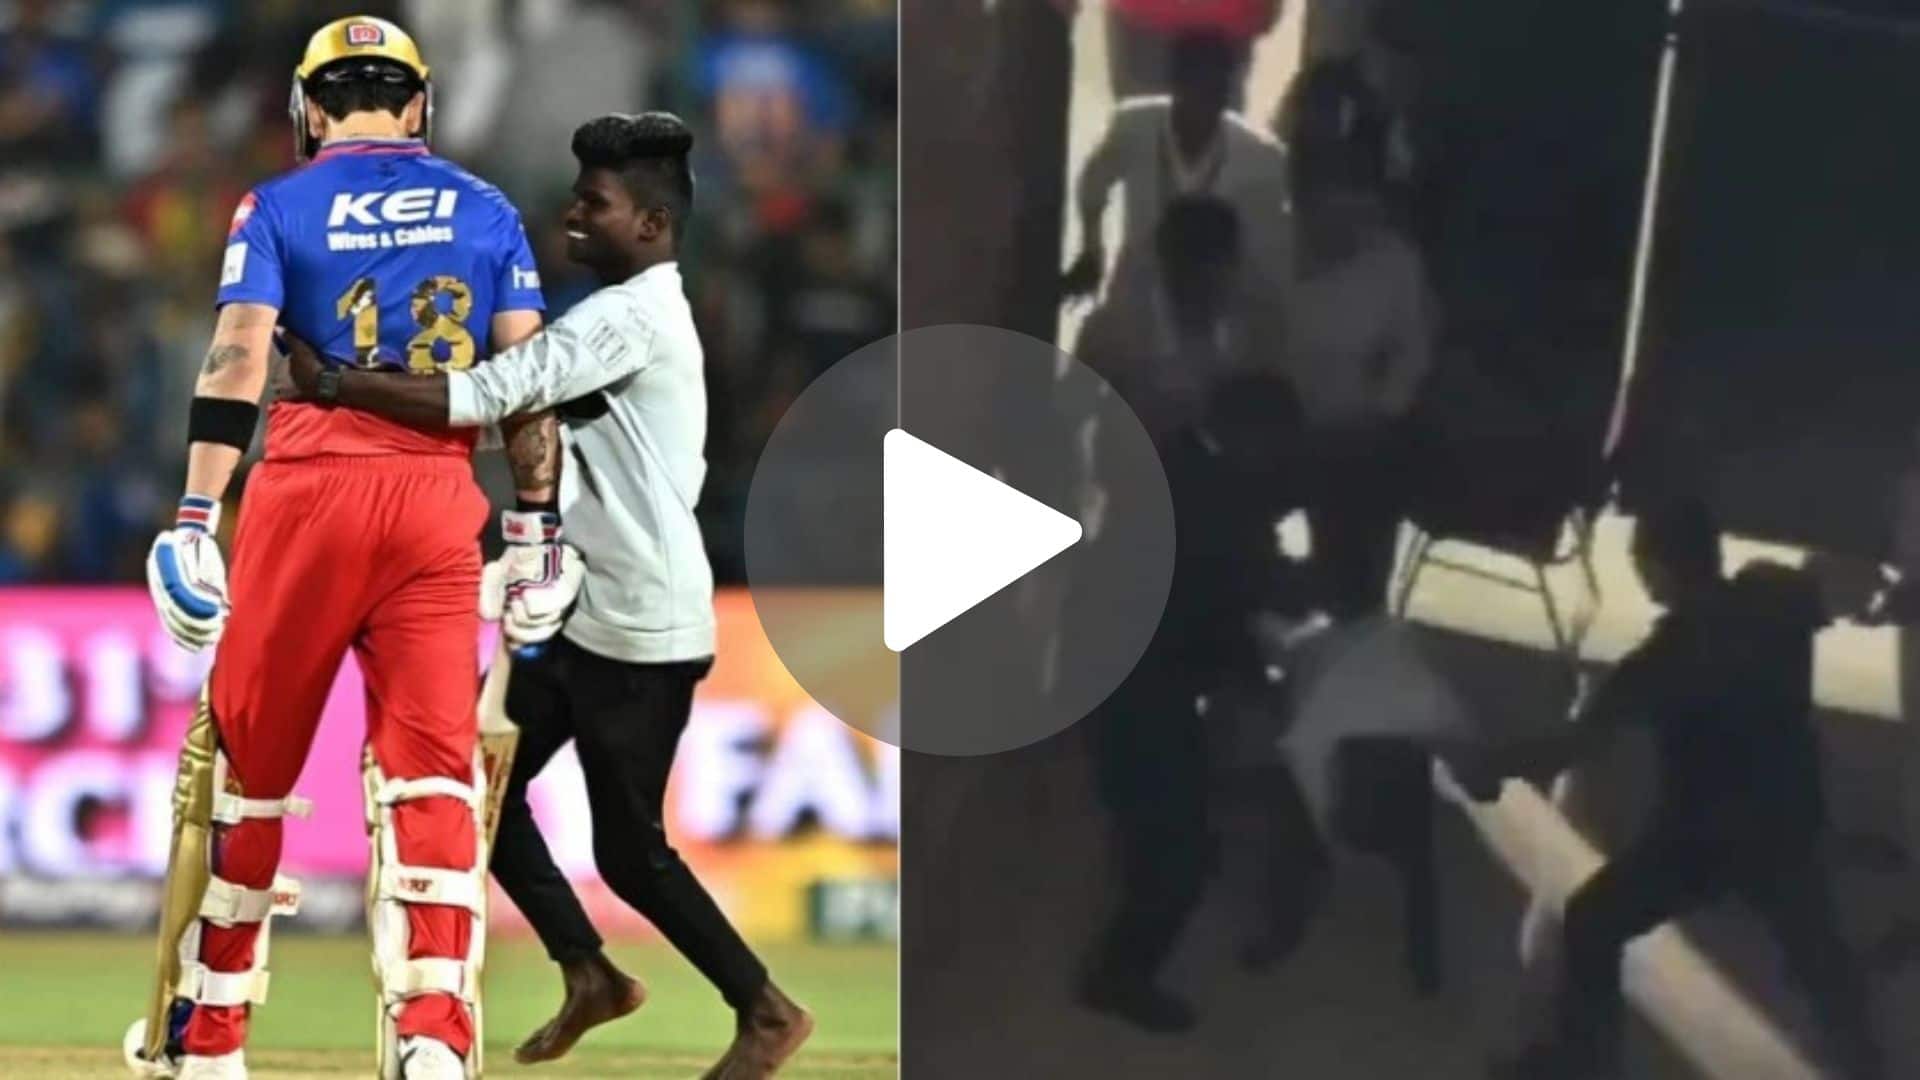 [Watch] Fan Who Hugged Virat Kohli During RCB vs PBKS Gets Thrashed By Security